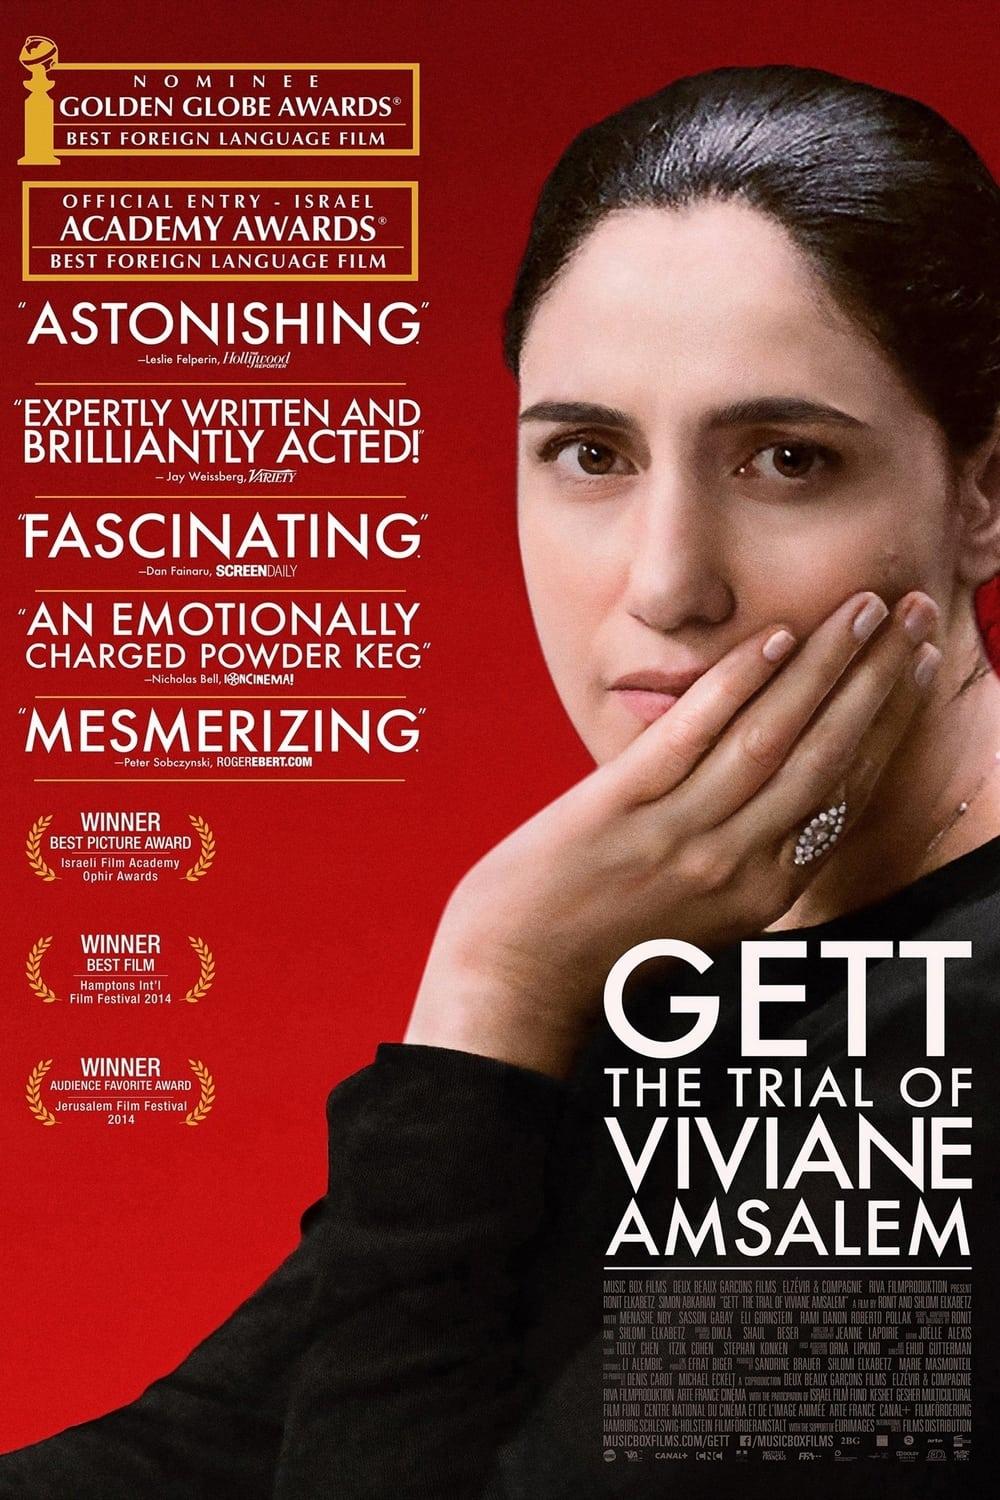 Gett: The Trial of Viviane Amsalem poster